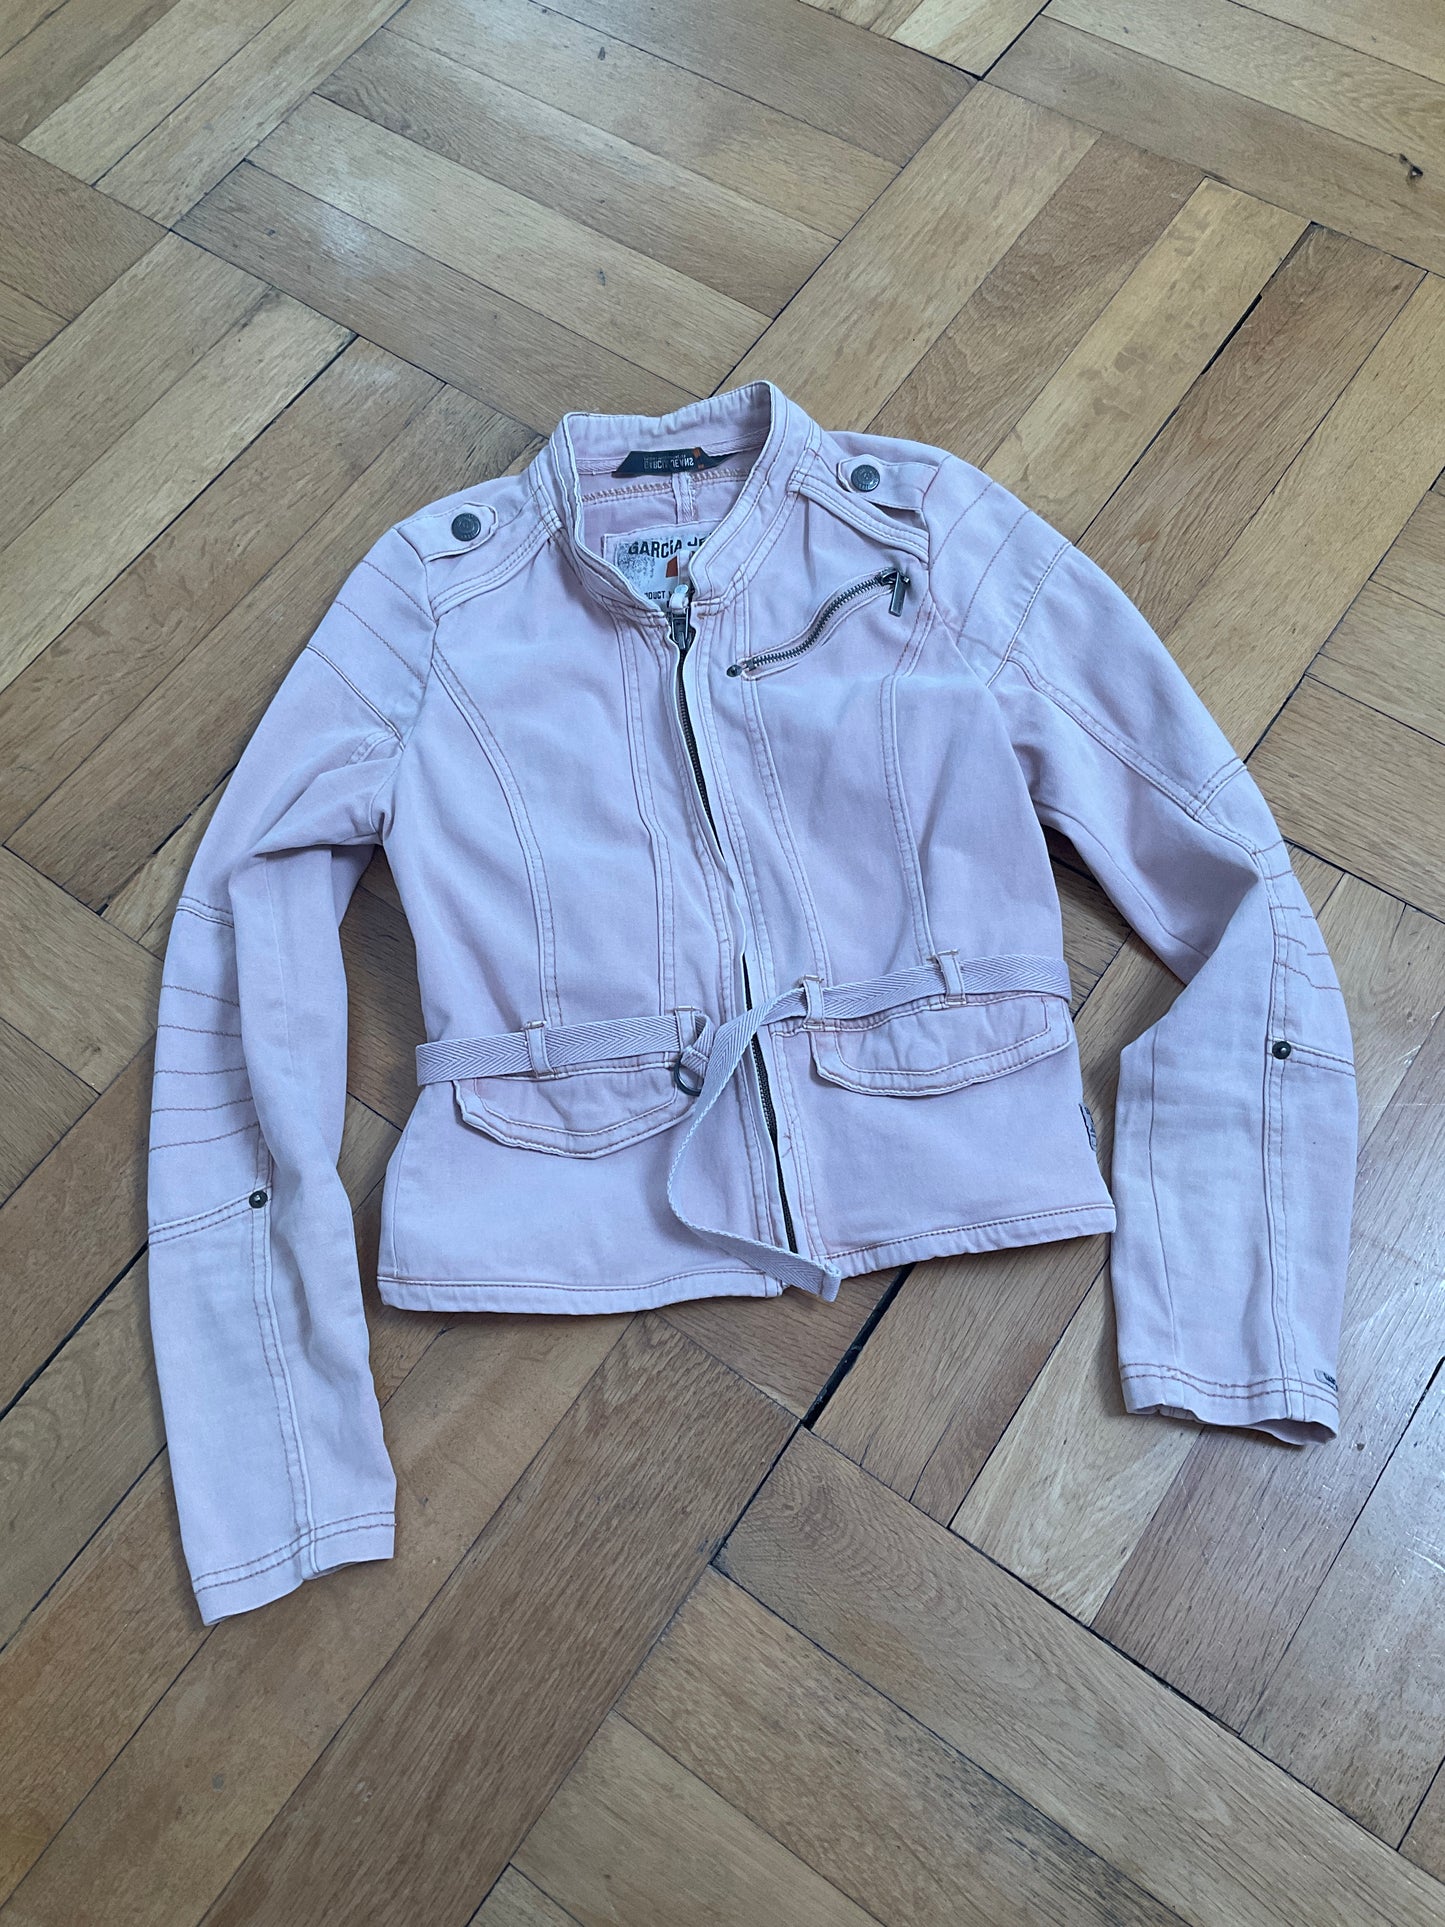 Pink summer jacket